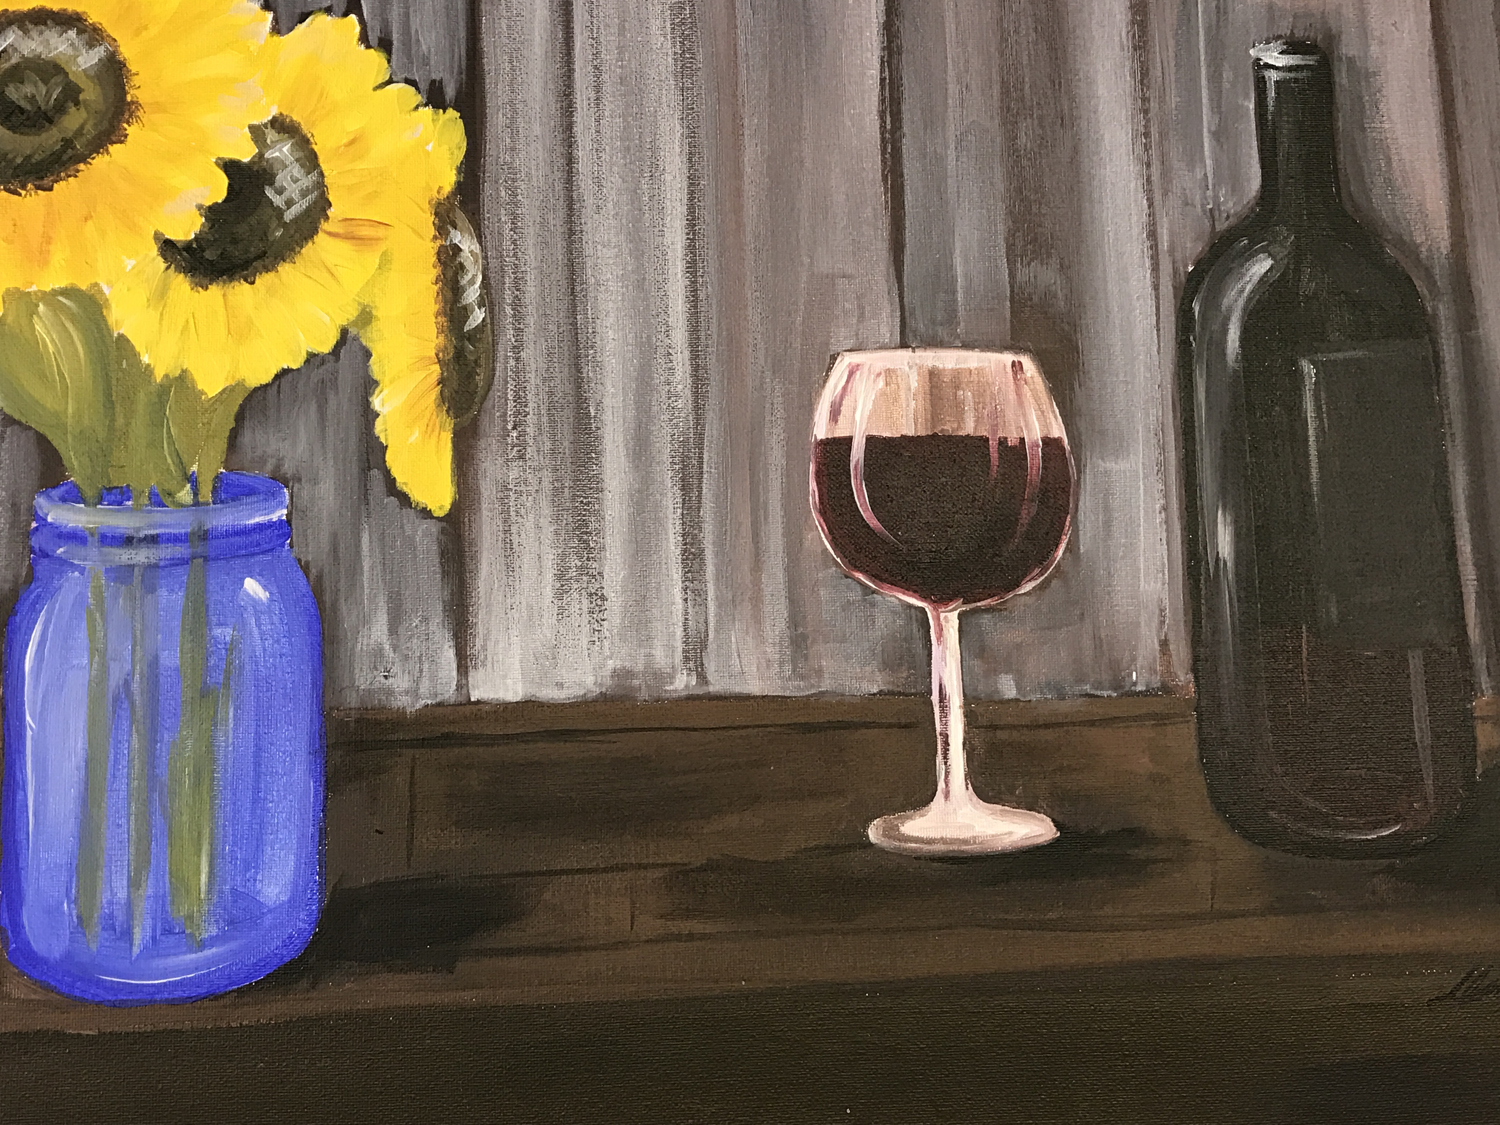 In Studio – Wine and Sunflowers